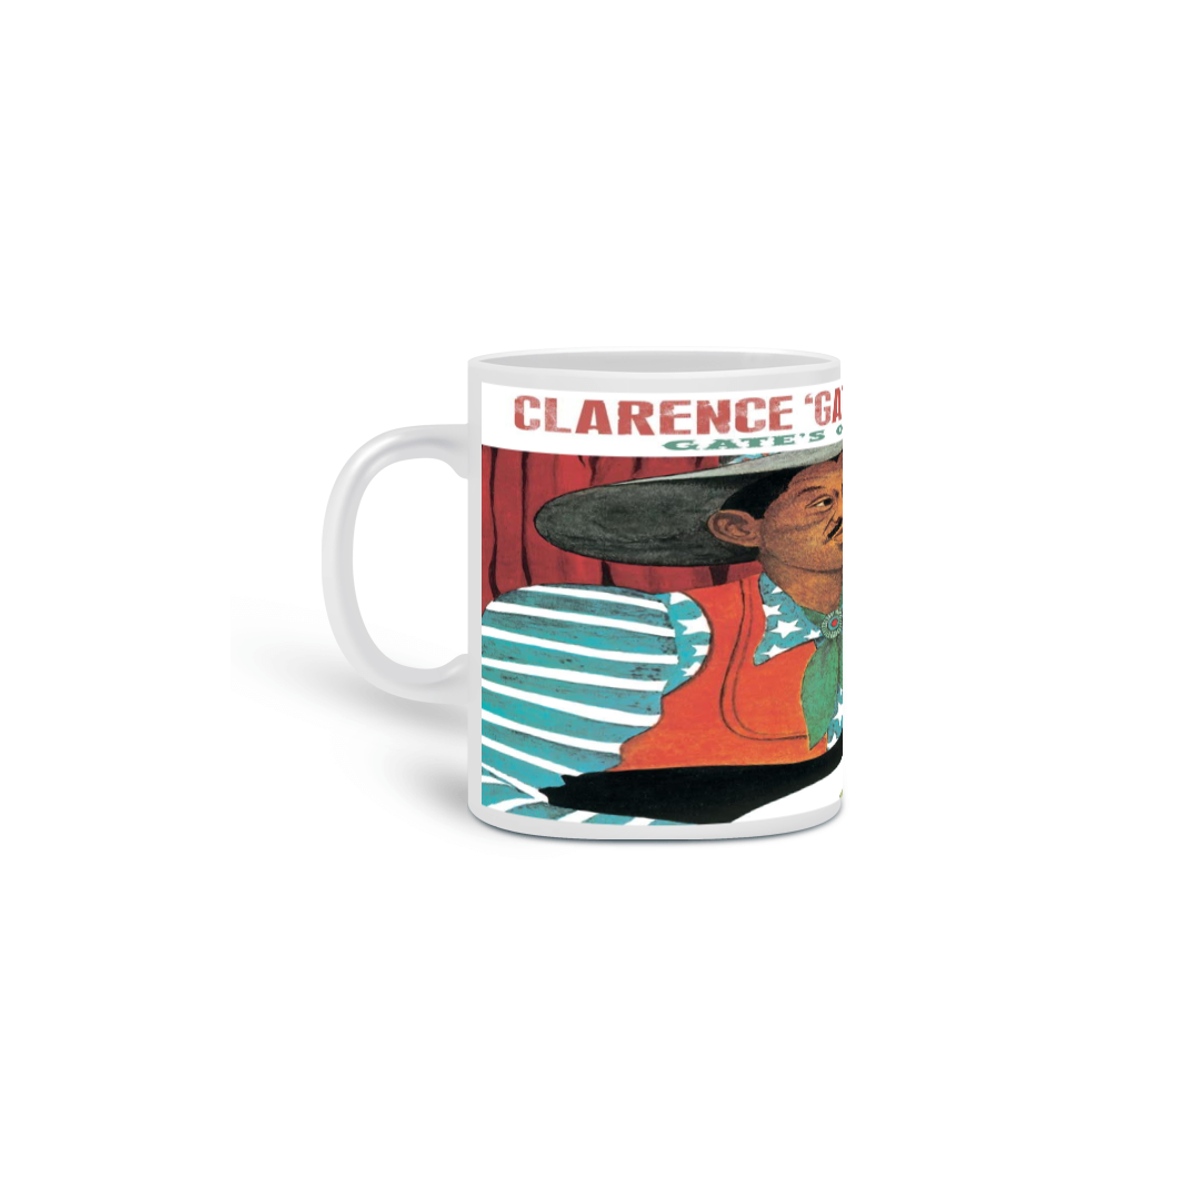 Nome do produto: Clarence \